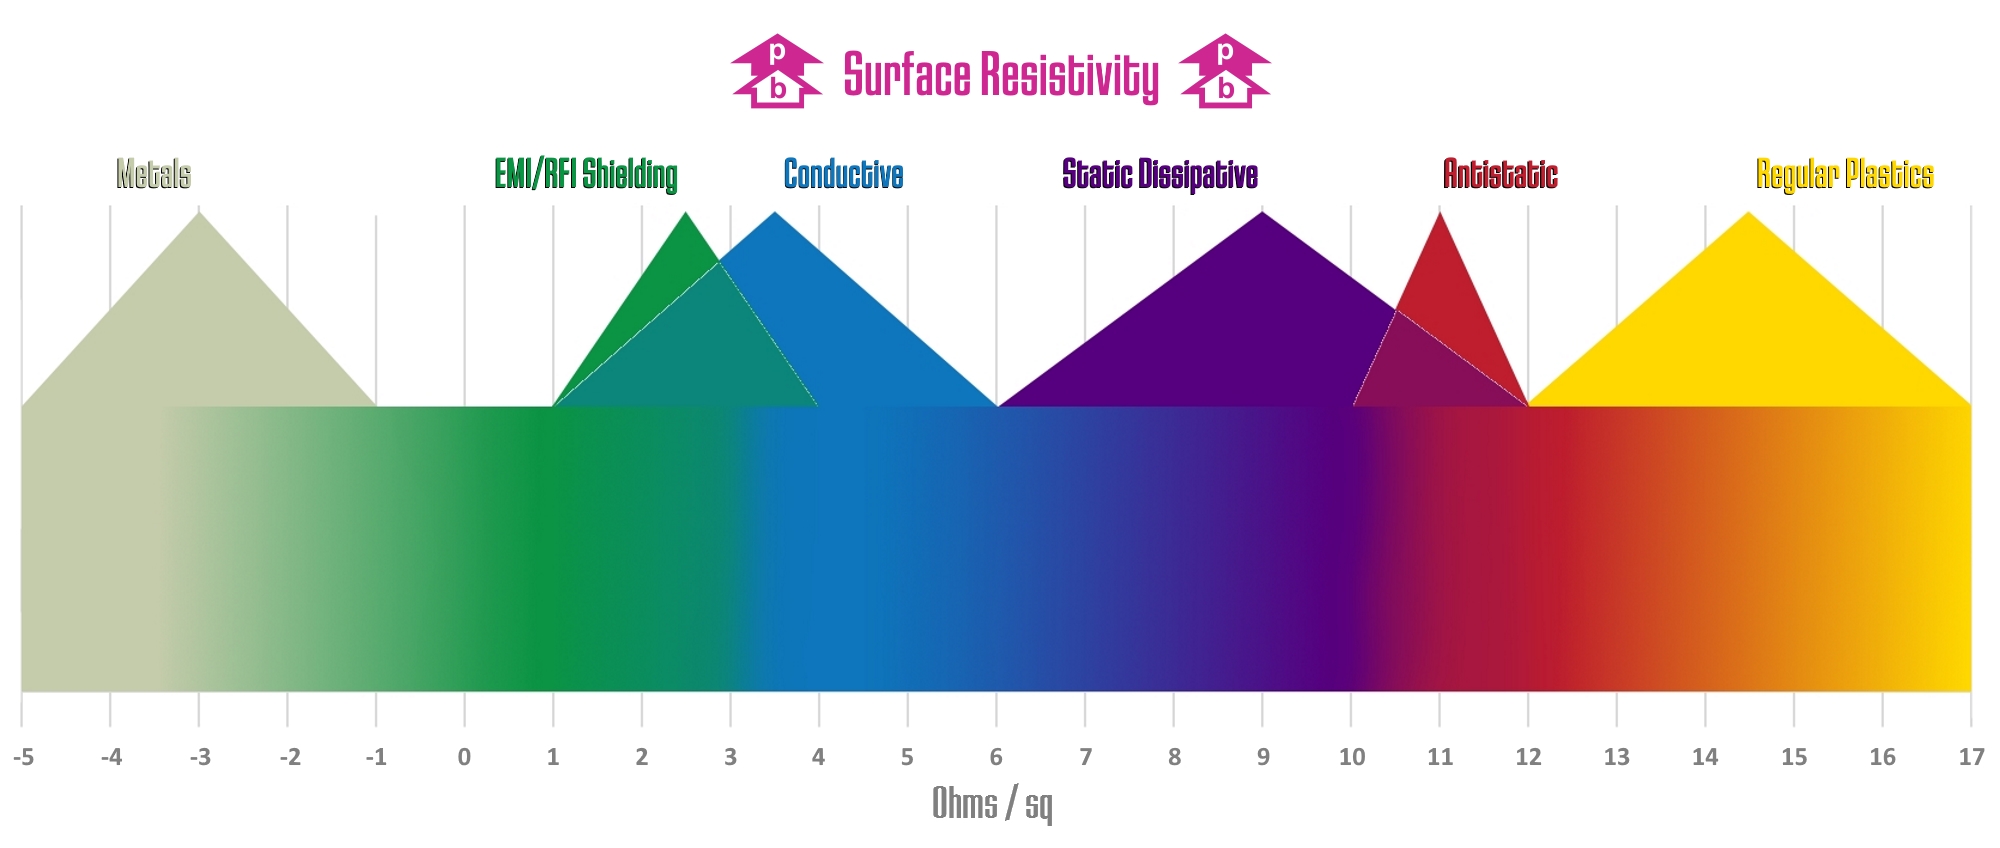 Plastic surface resistivity chart